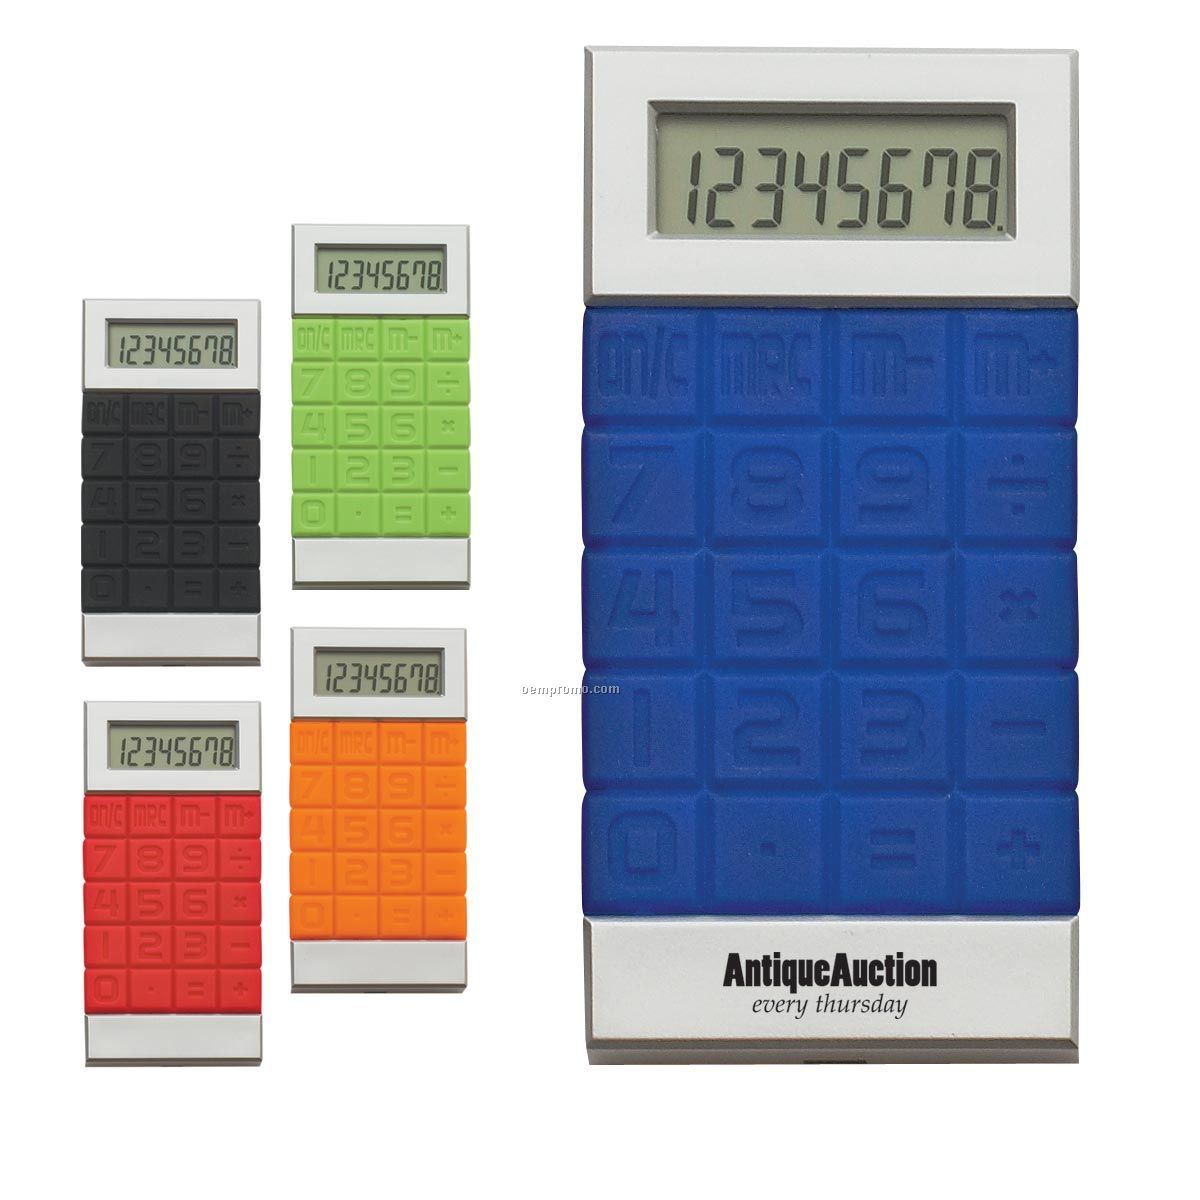 Silicone Key Calculator